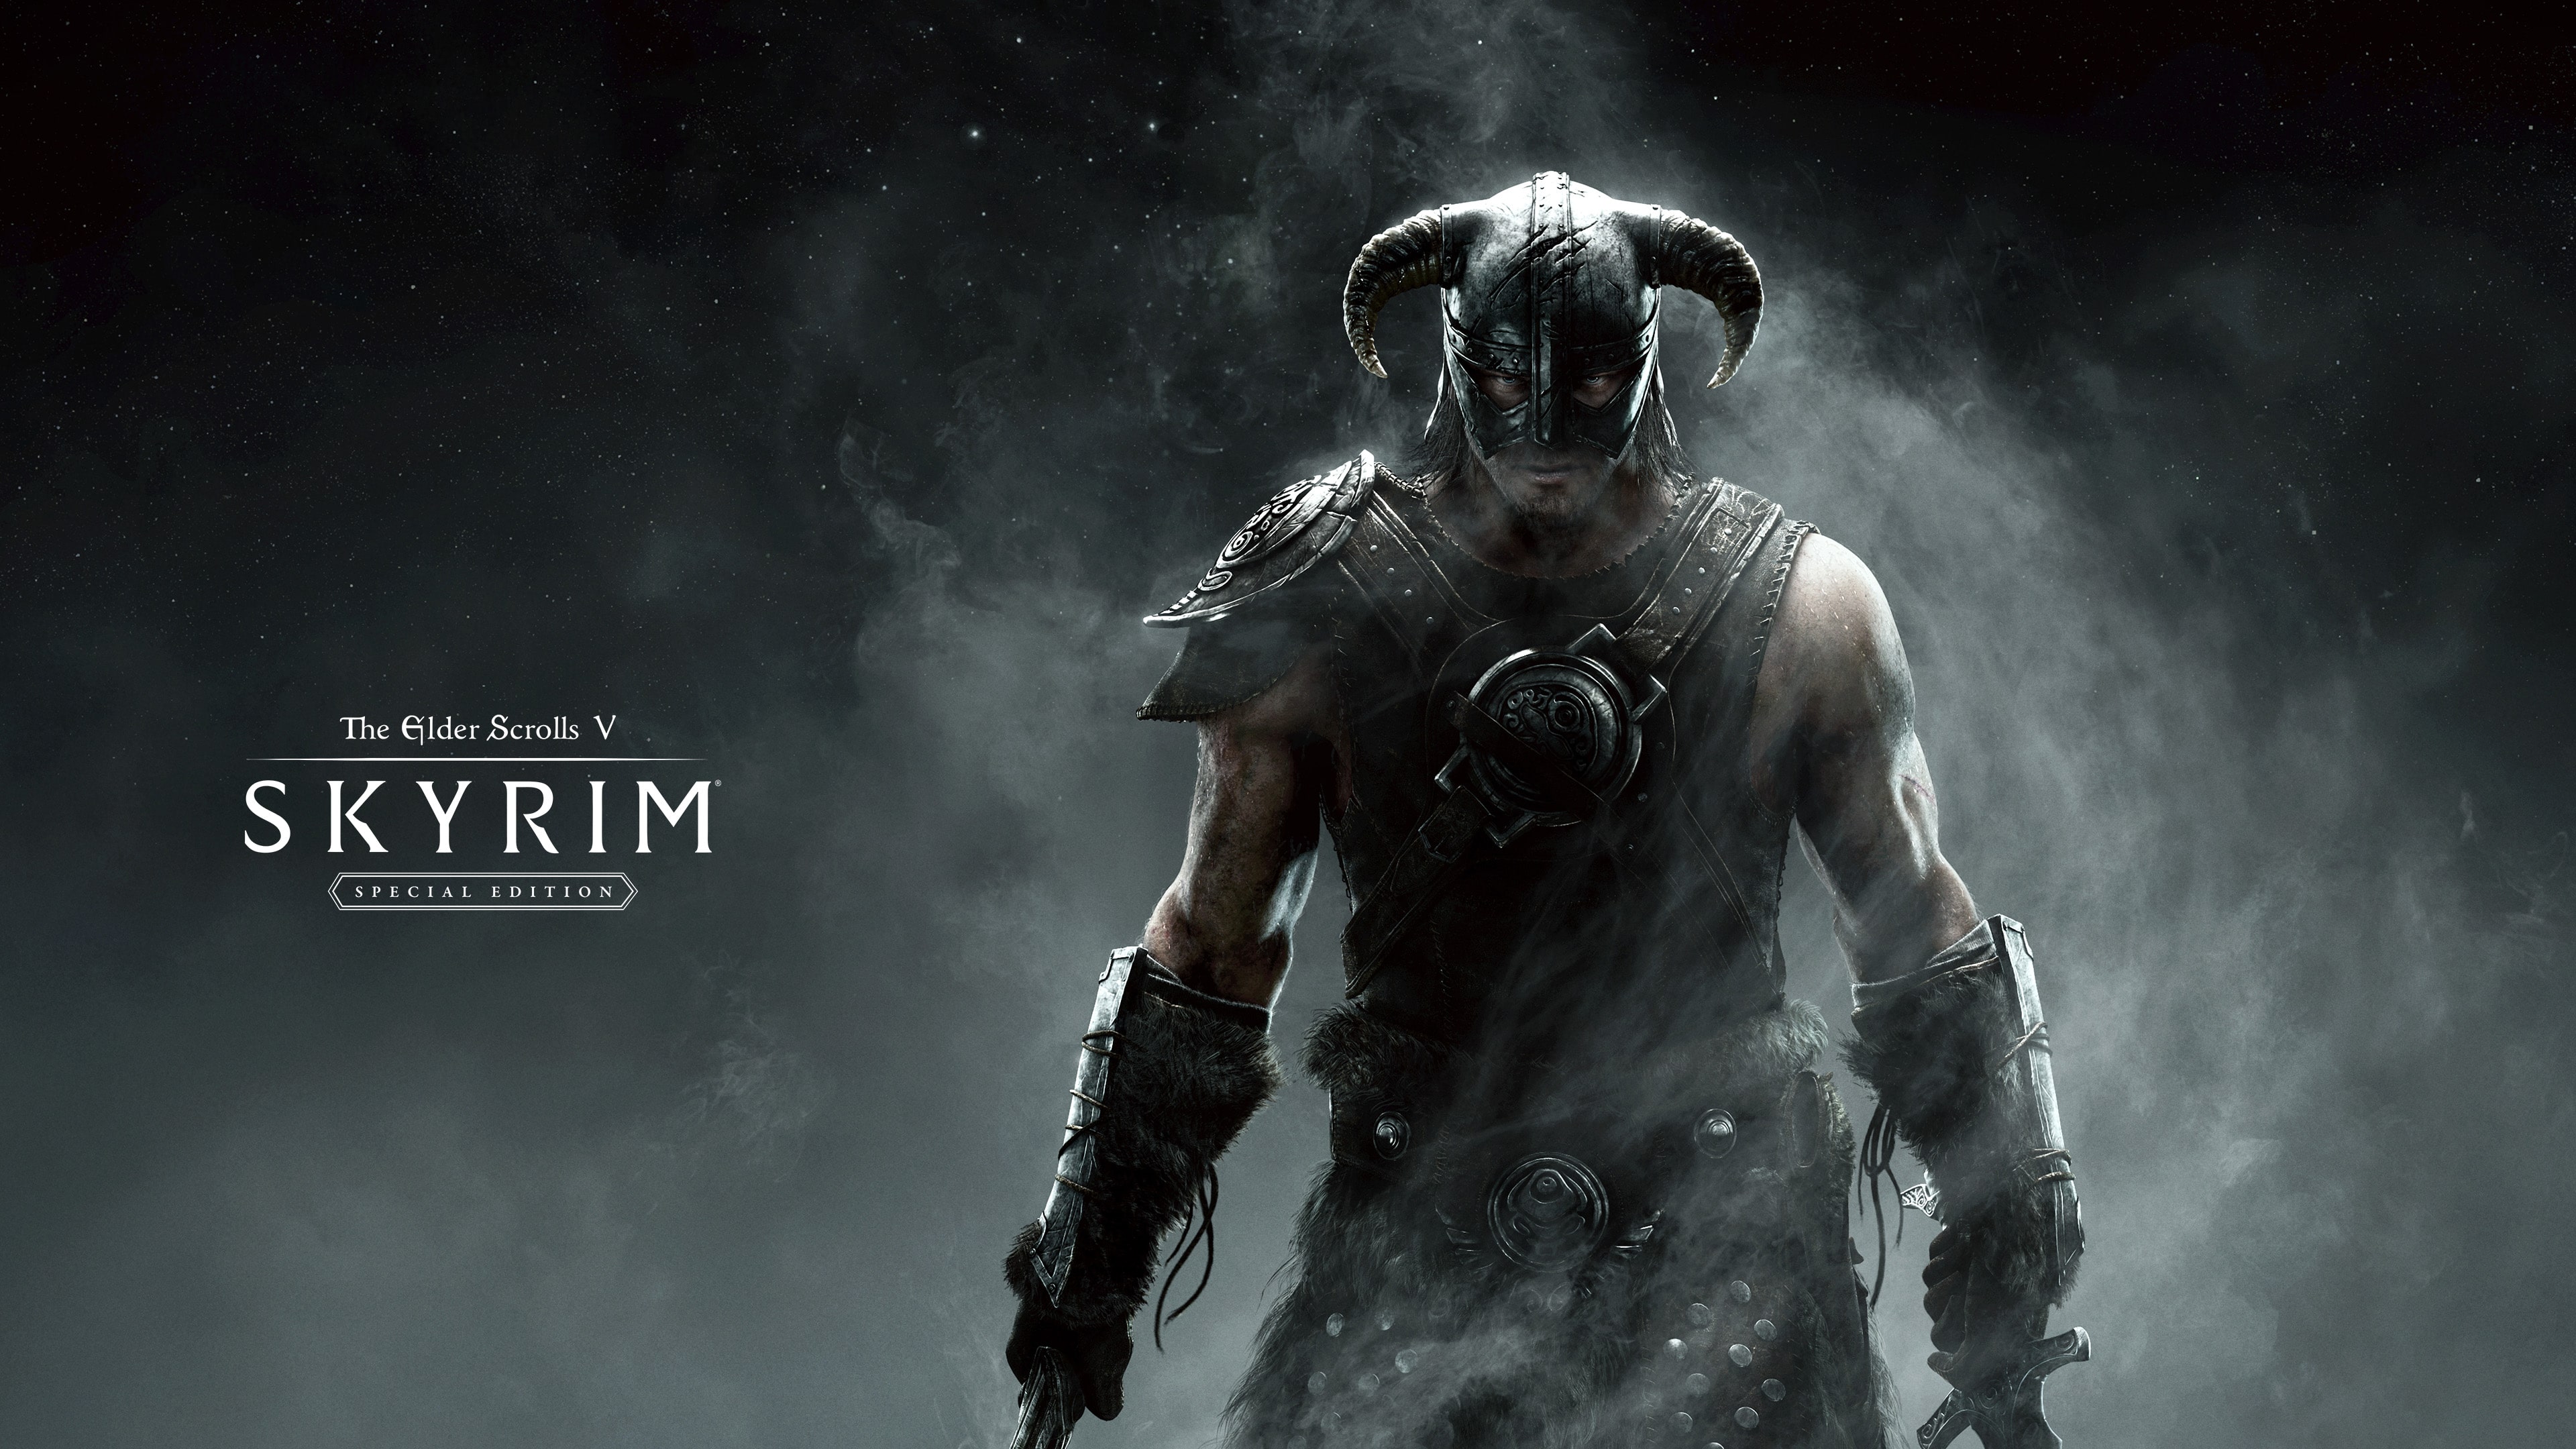 The Elder Scrolls V: Skyrim Anniversary Edition - PS4 PlayStation